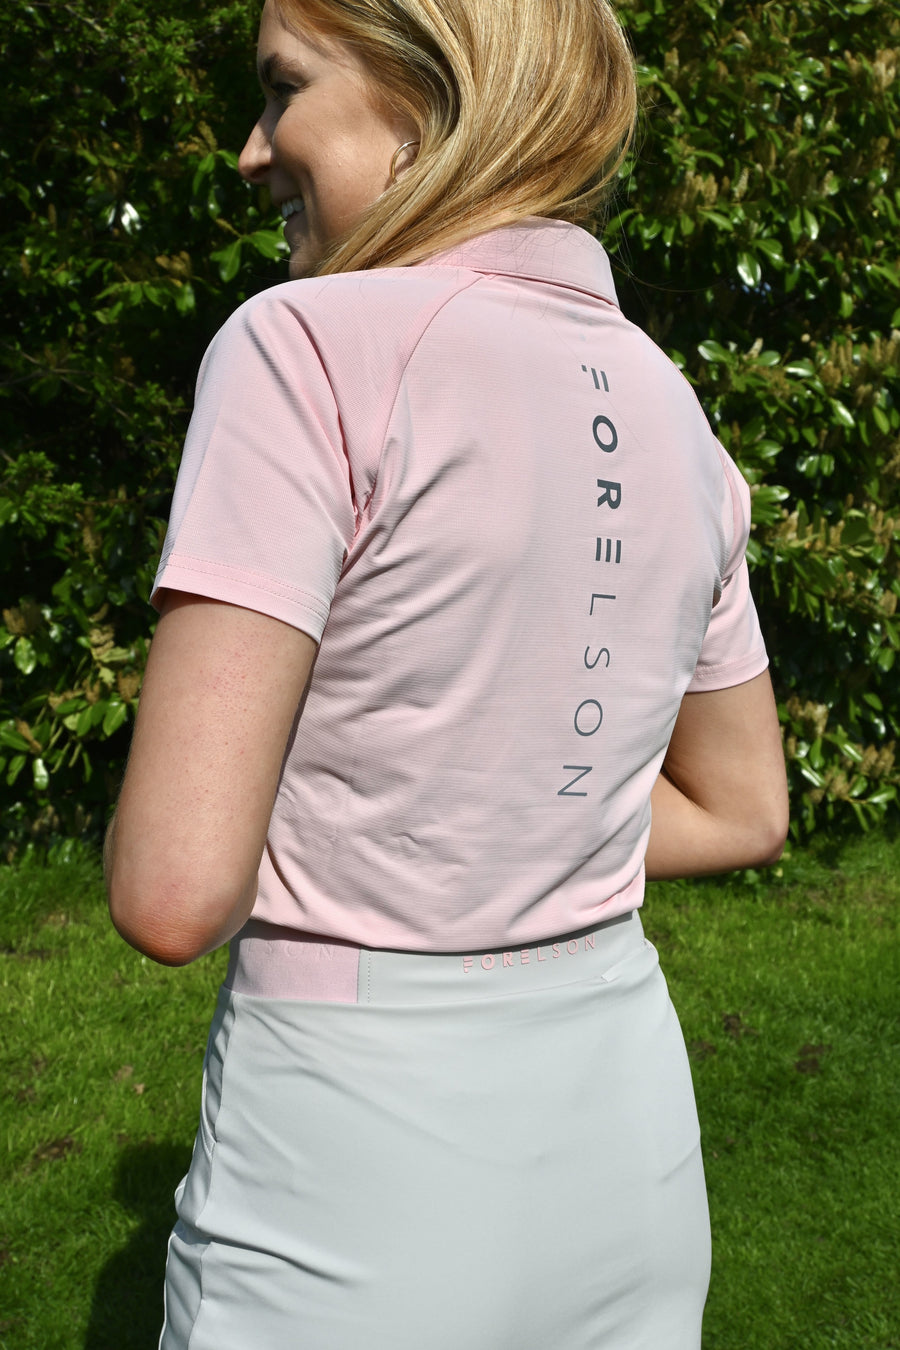 Women's pink golf zip polo shirt. Lightweight breathable fabric.